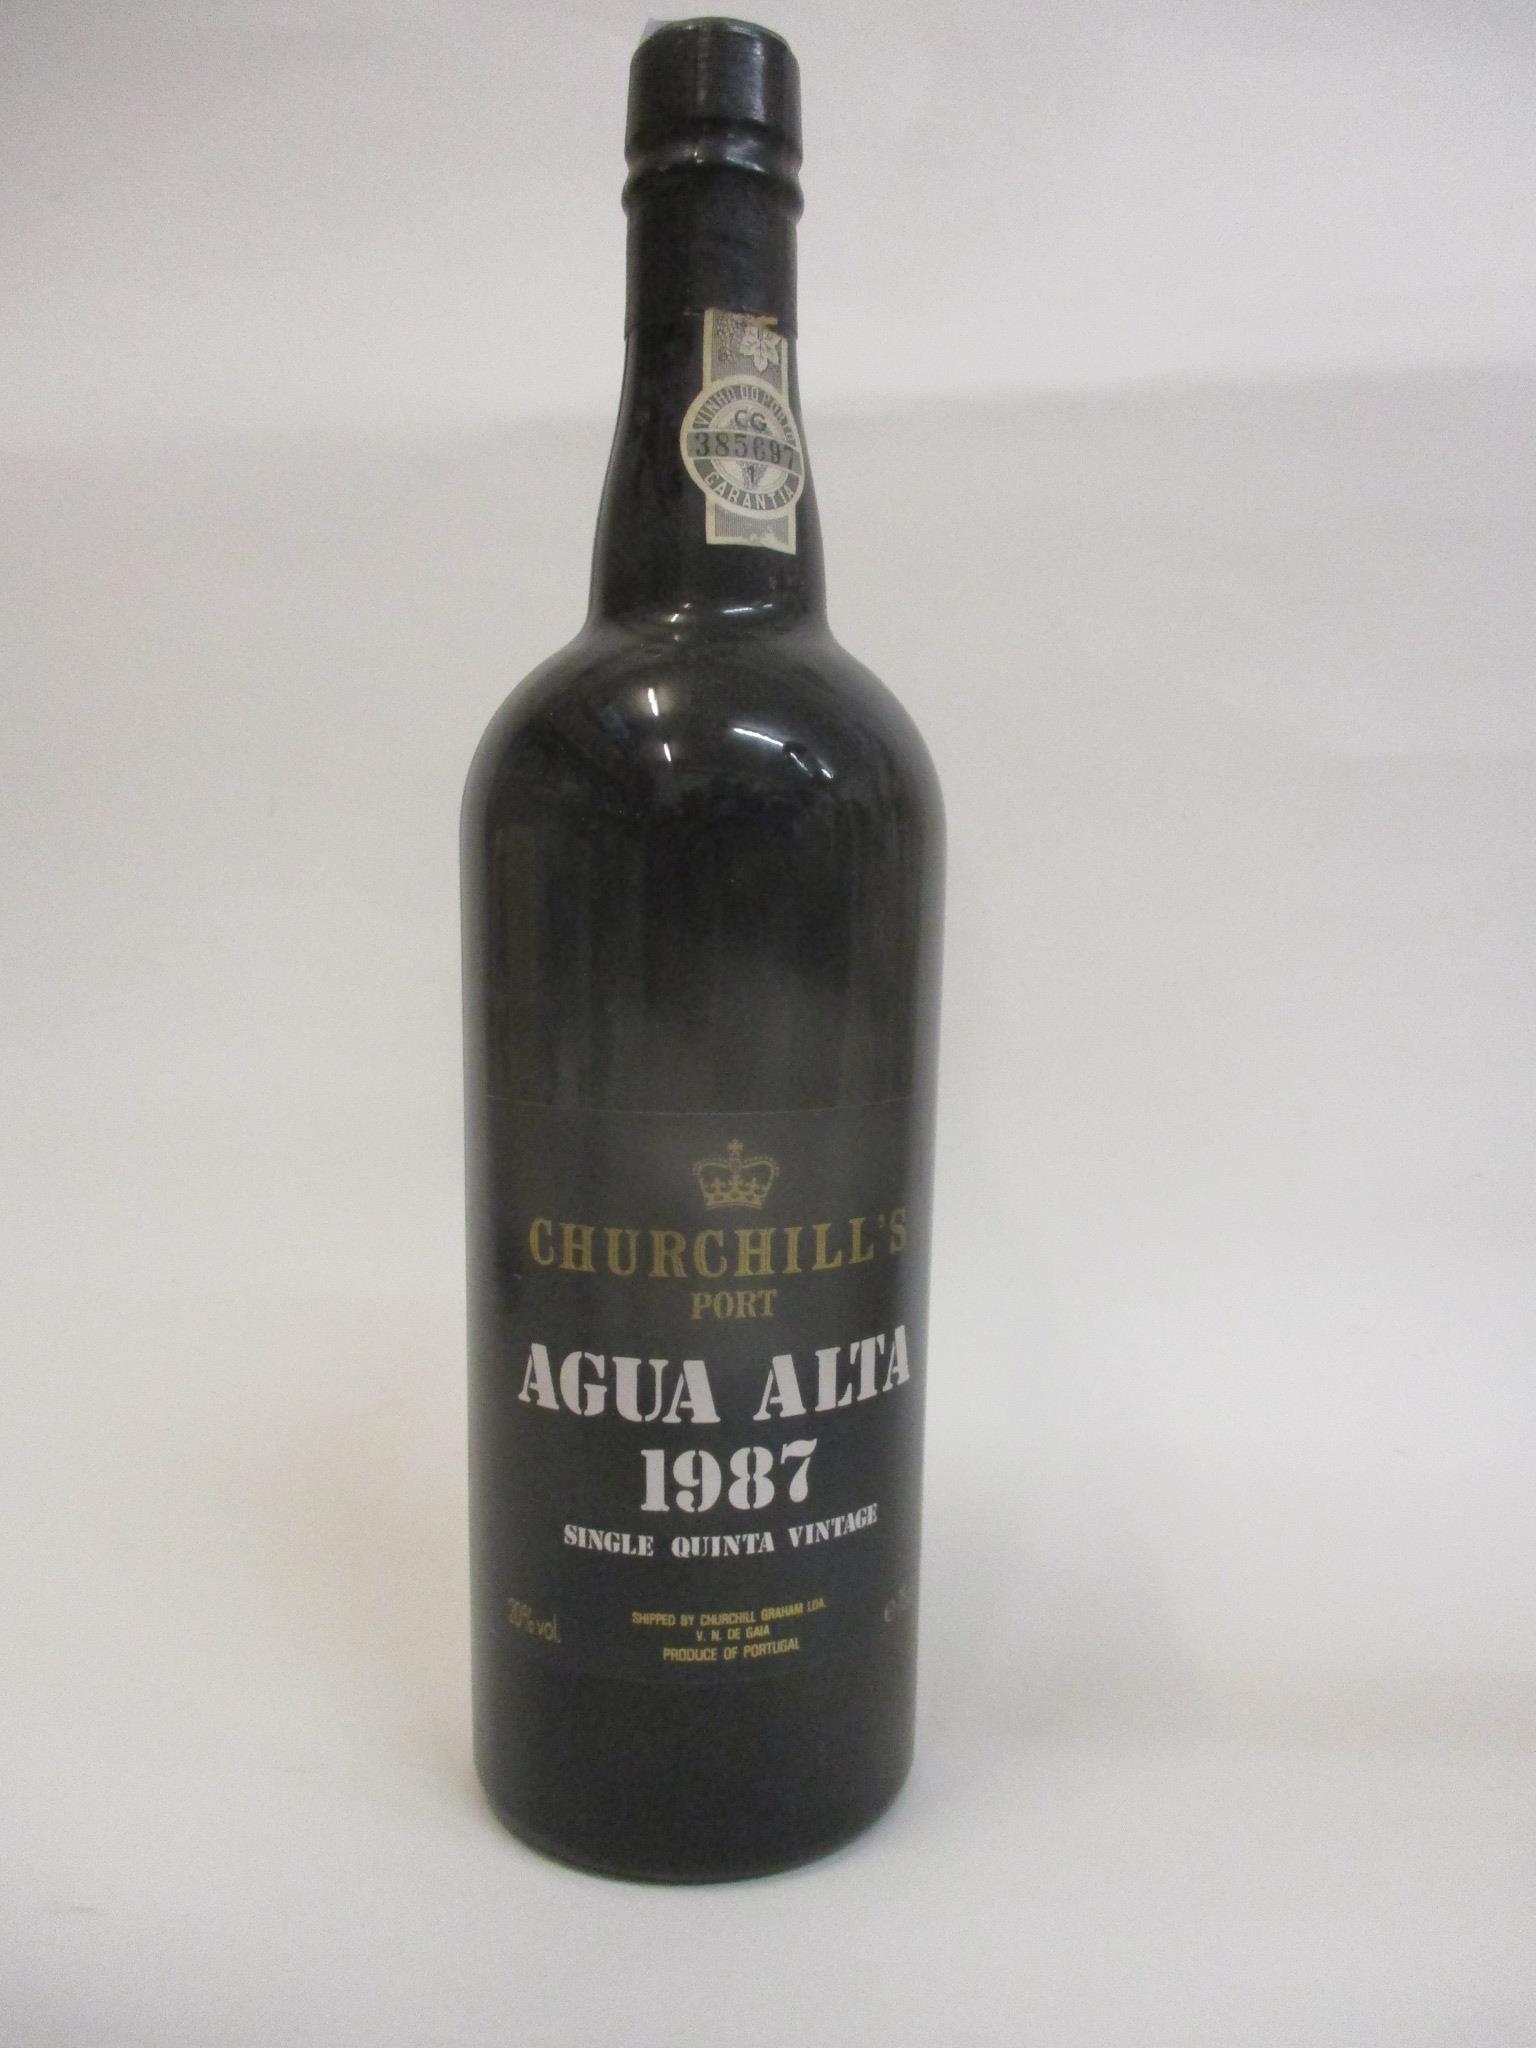 One bottle of Churchill Port Agua Alta, 1987 Vintage, 75cl